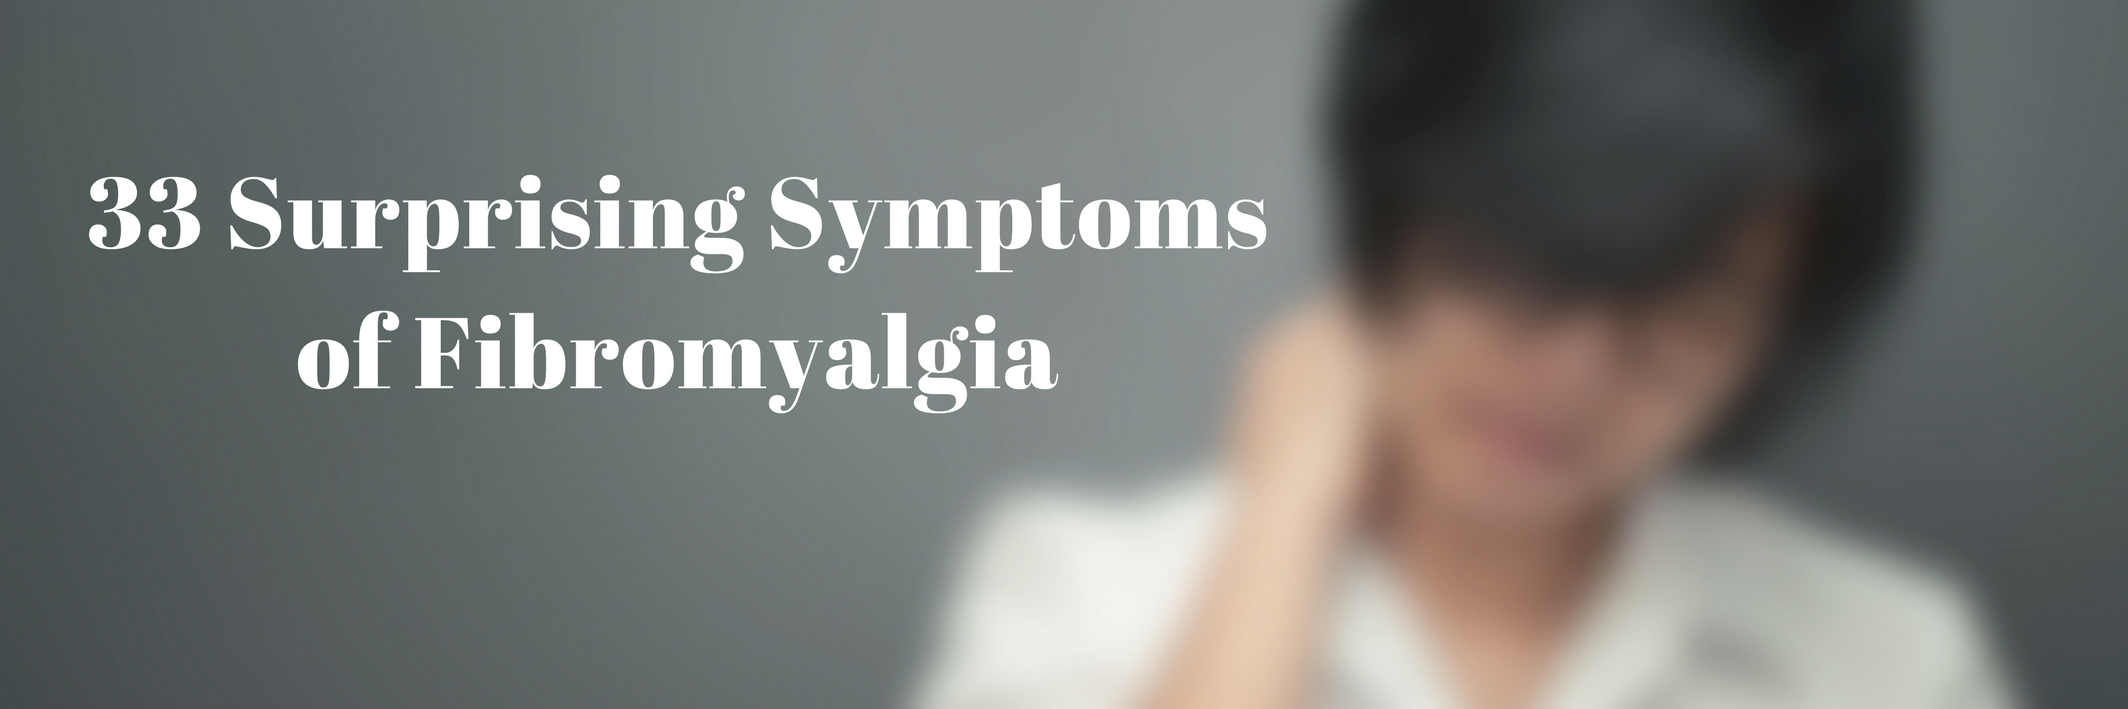 33 surprising symptoms of fibromyalgia